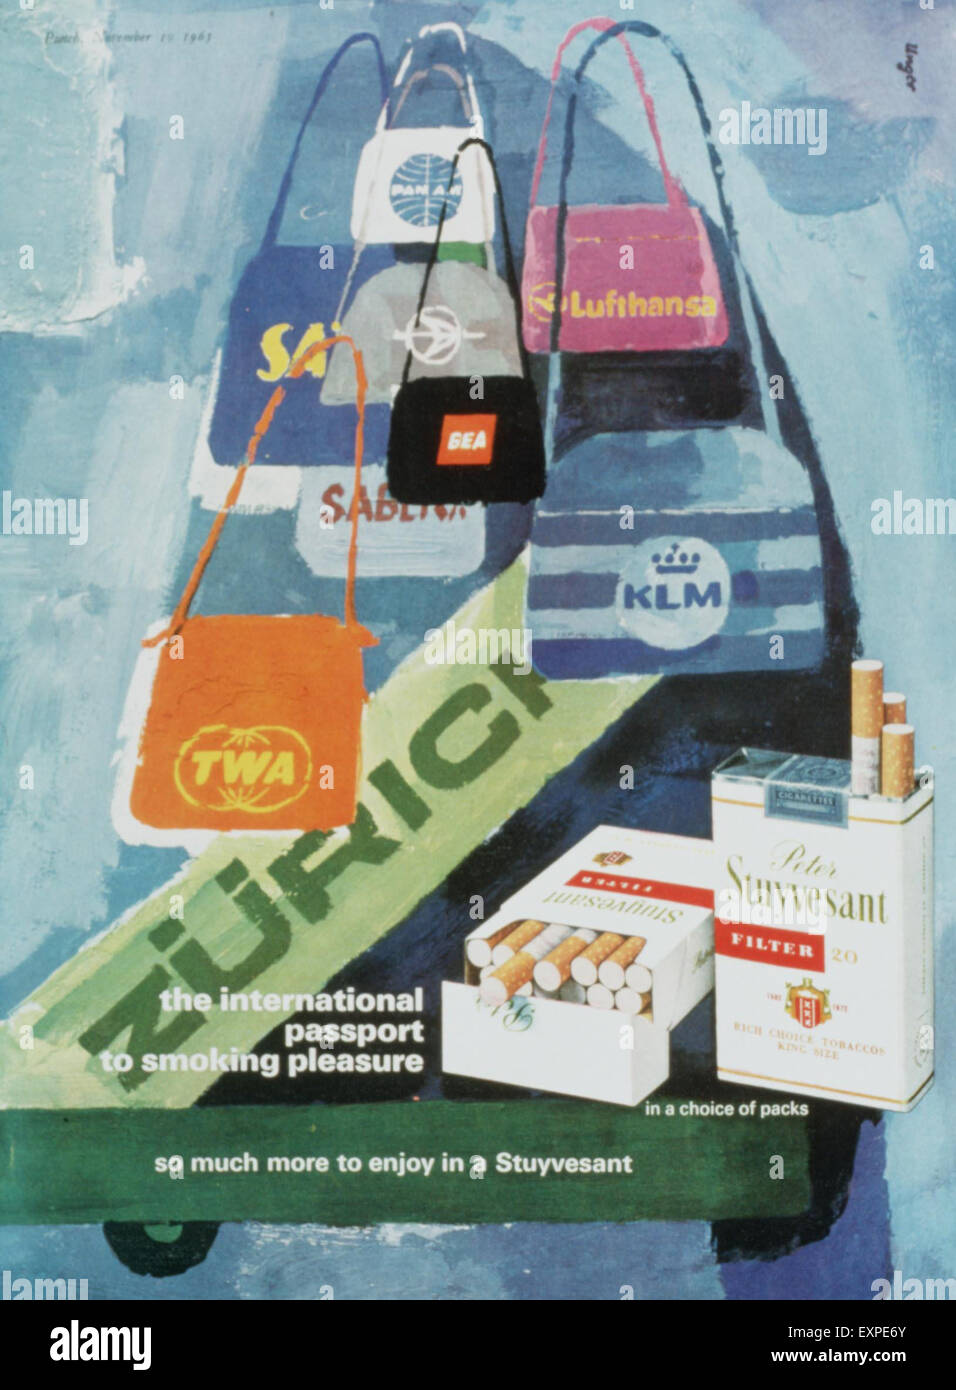 1960er Jahre UK Peter Stuyvesant Magazin Anzeige Stockfoto